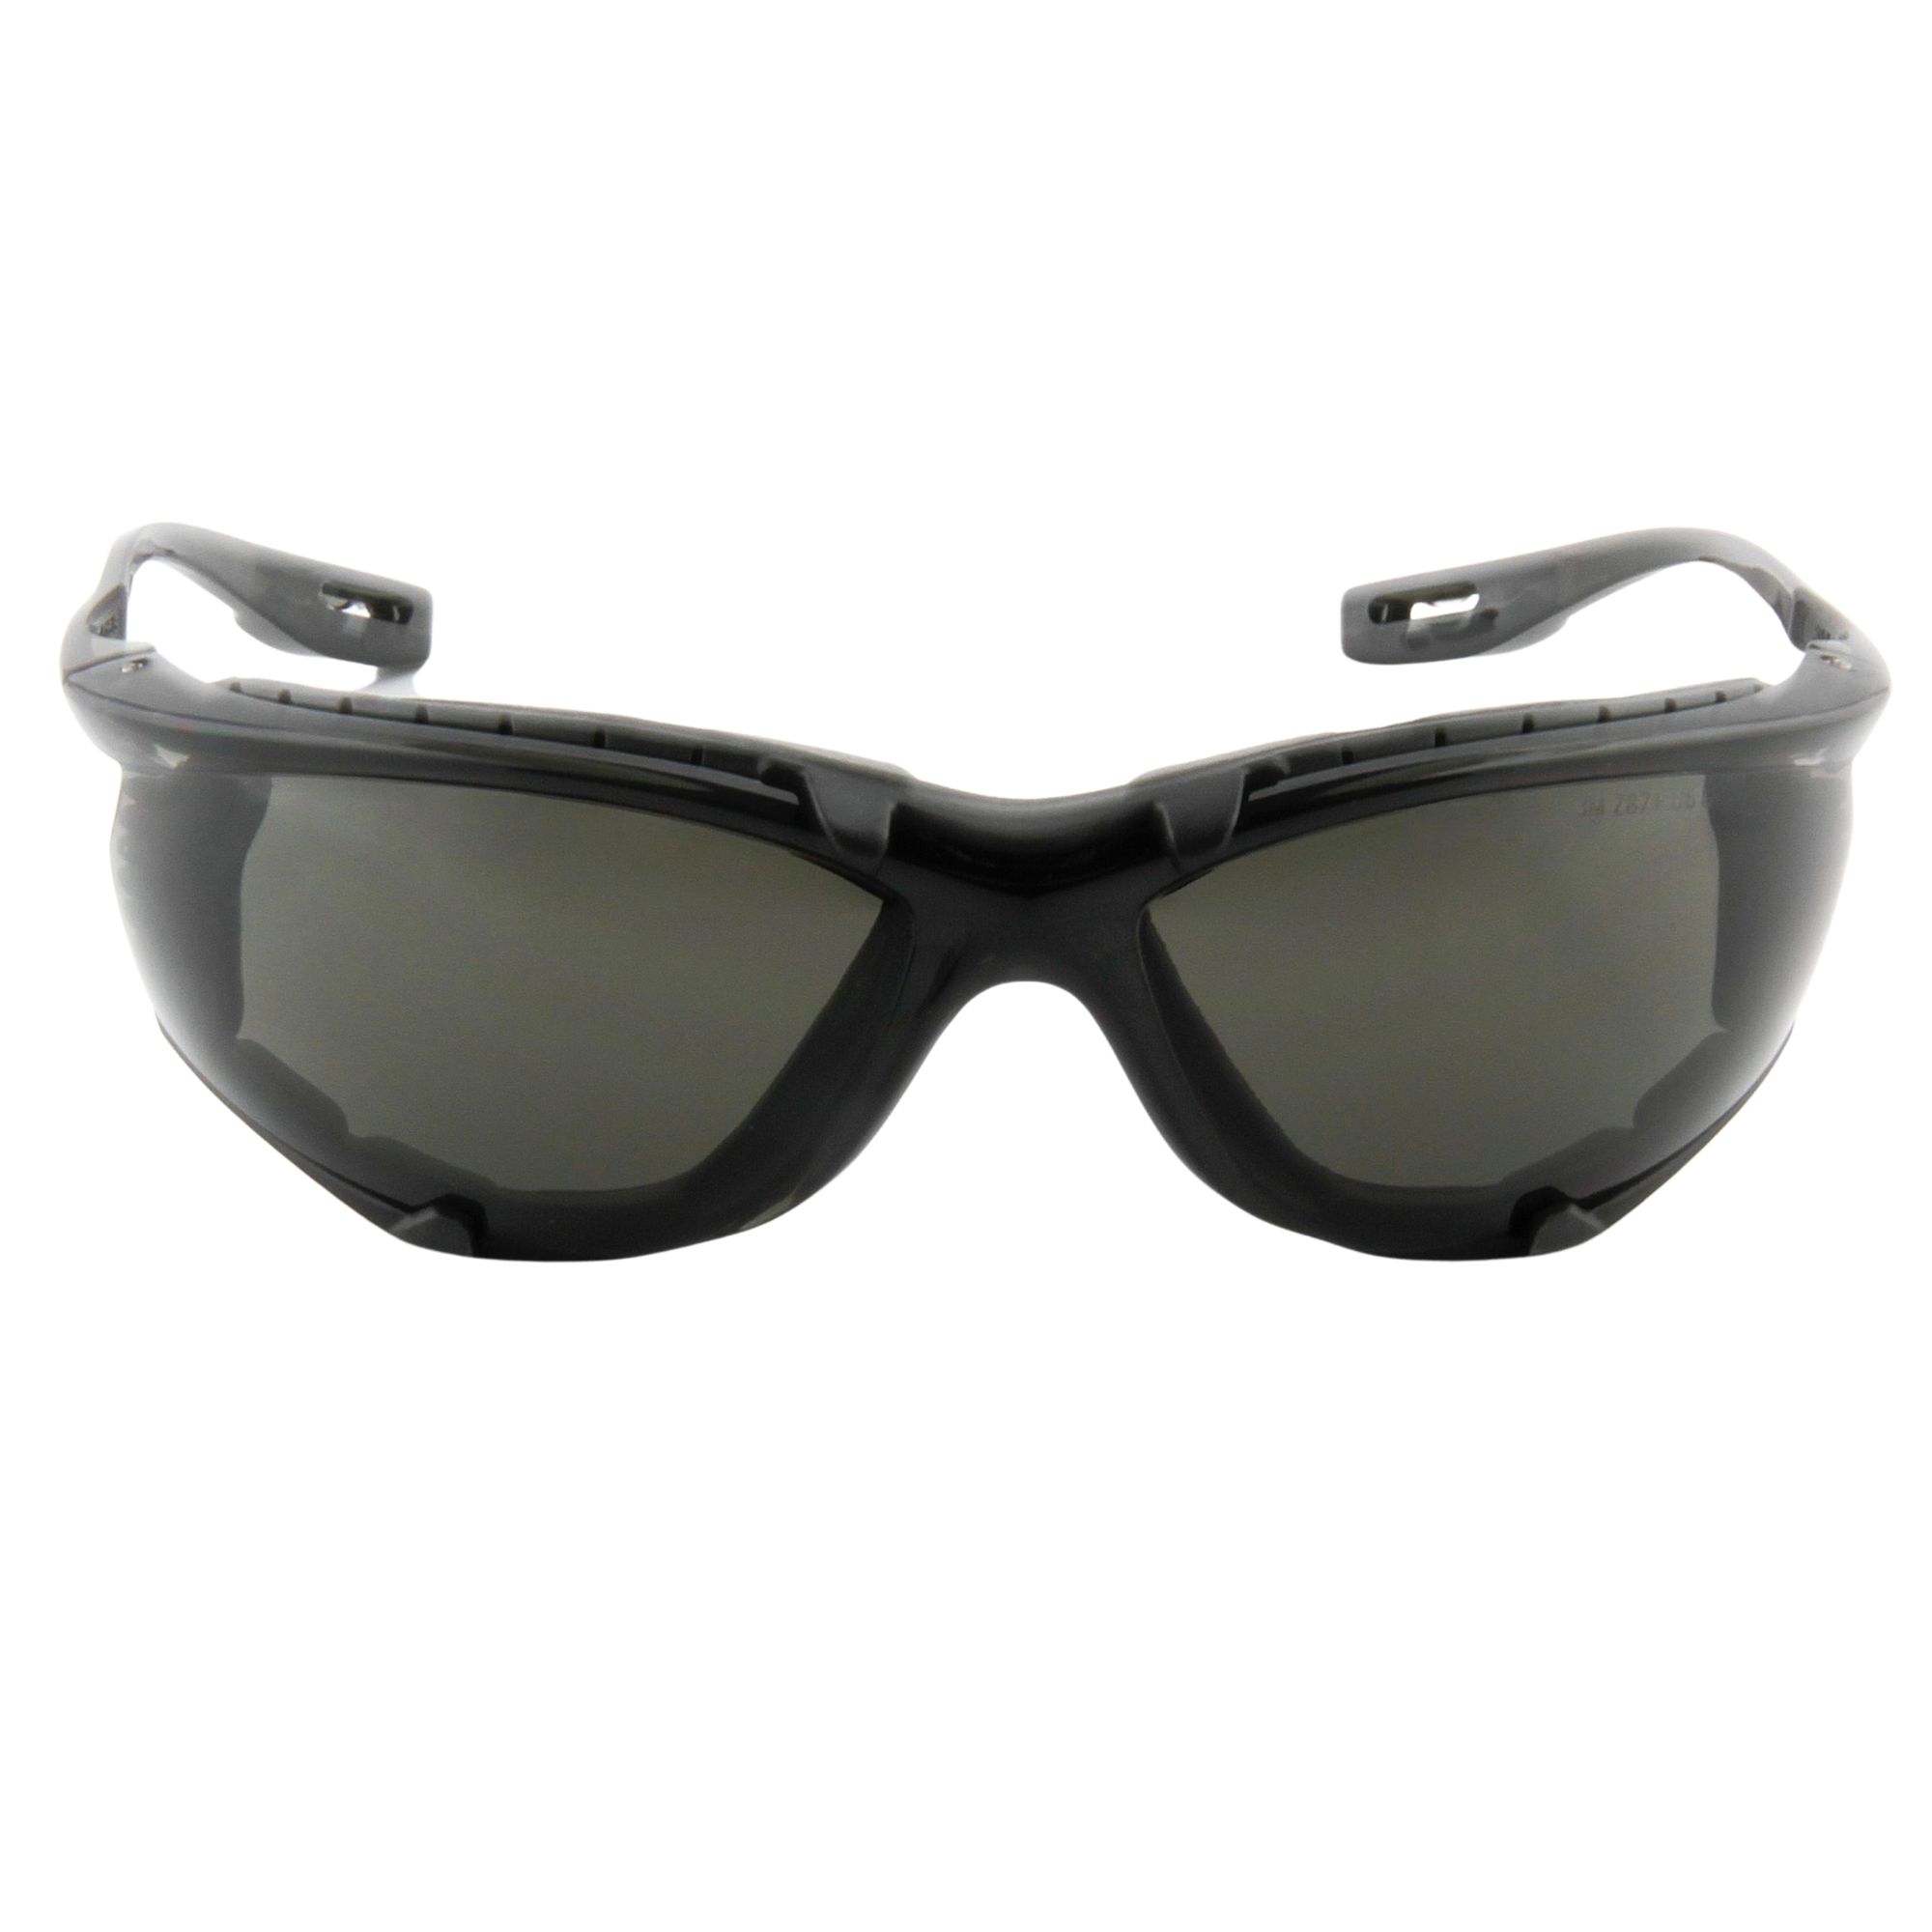 3M Virtua CCS Protective Eyewear